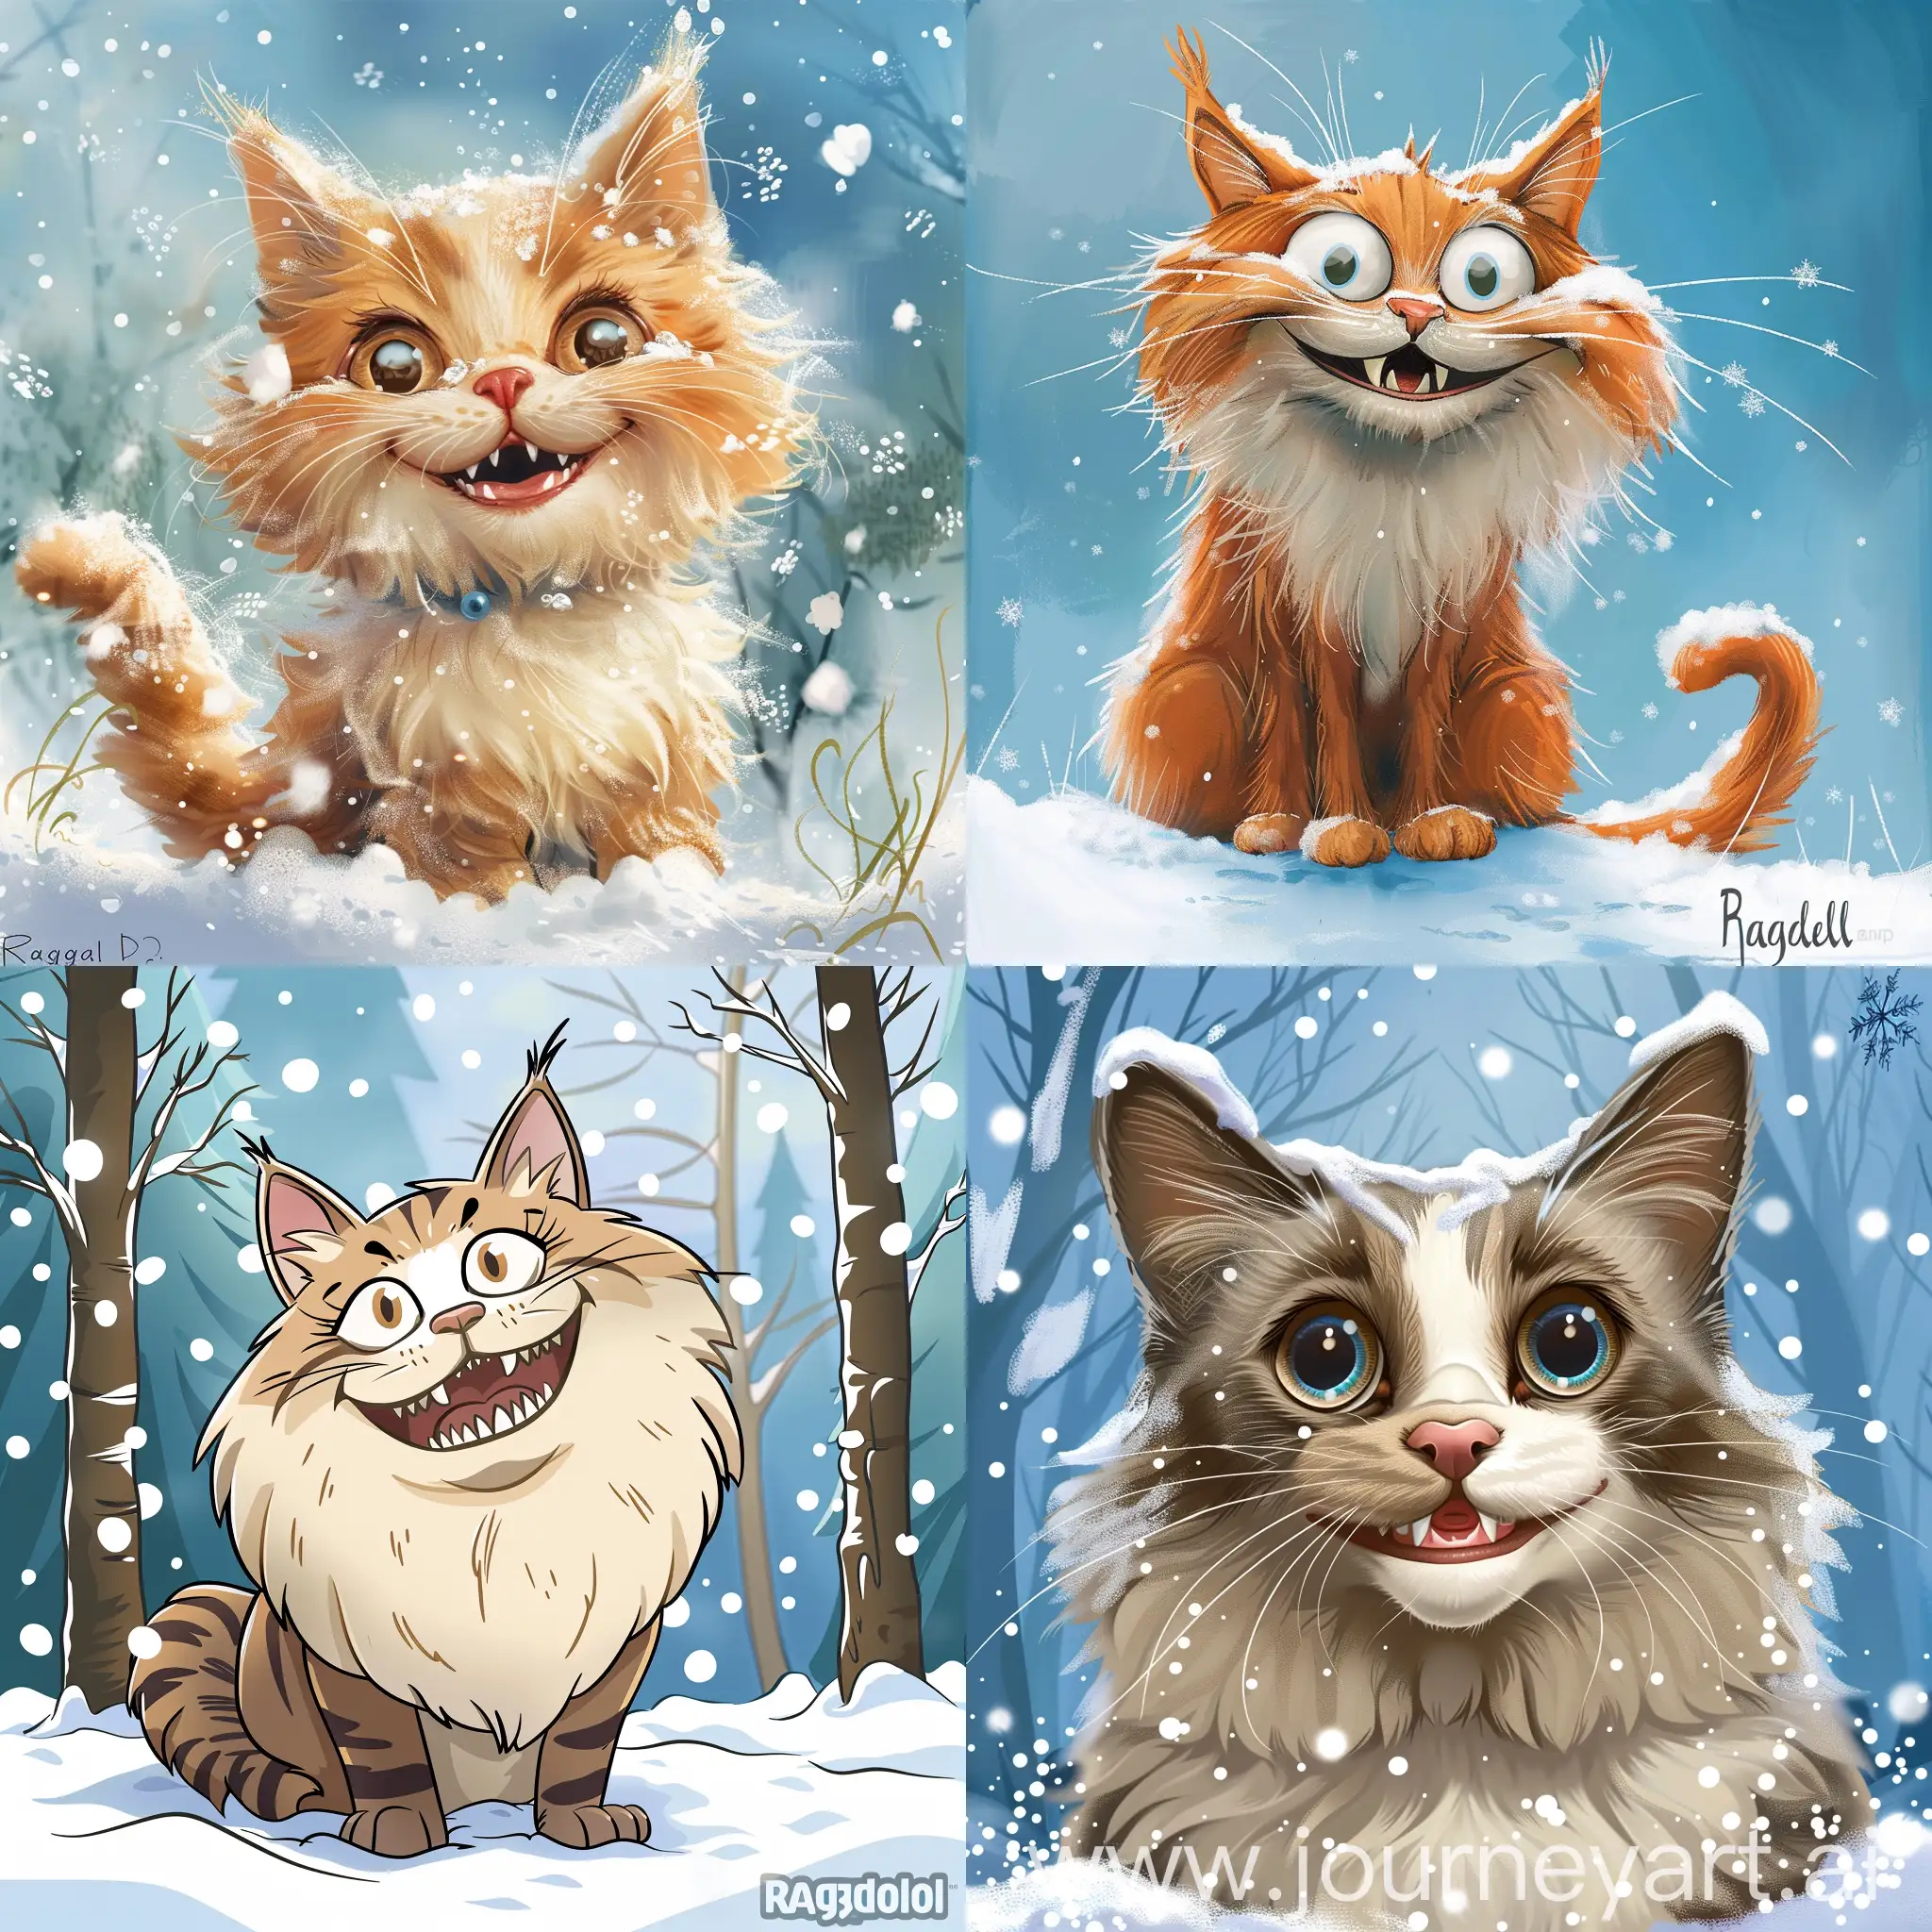 Raggdol cat, smiling, cartoon, snow